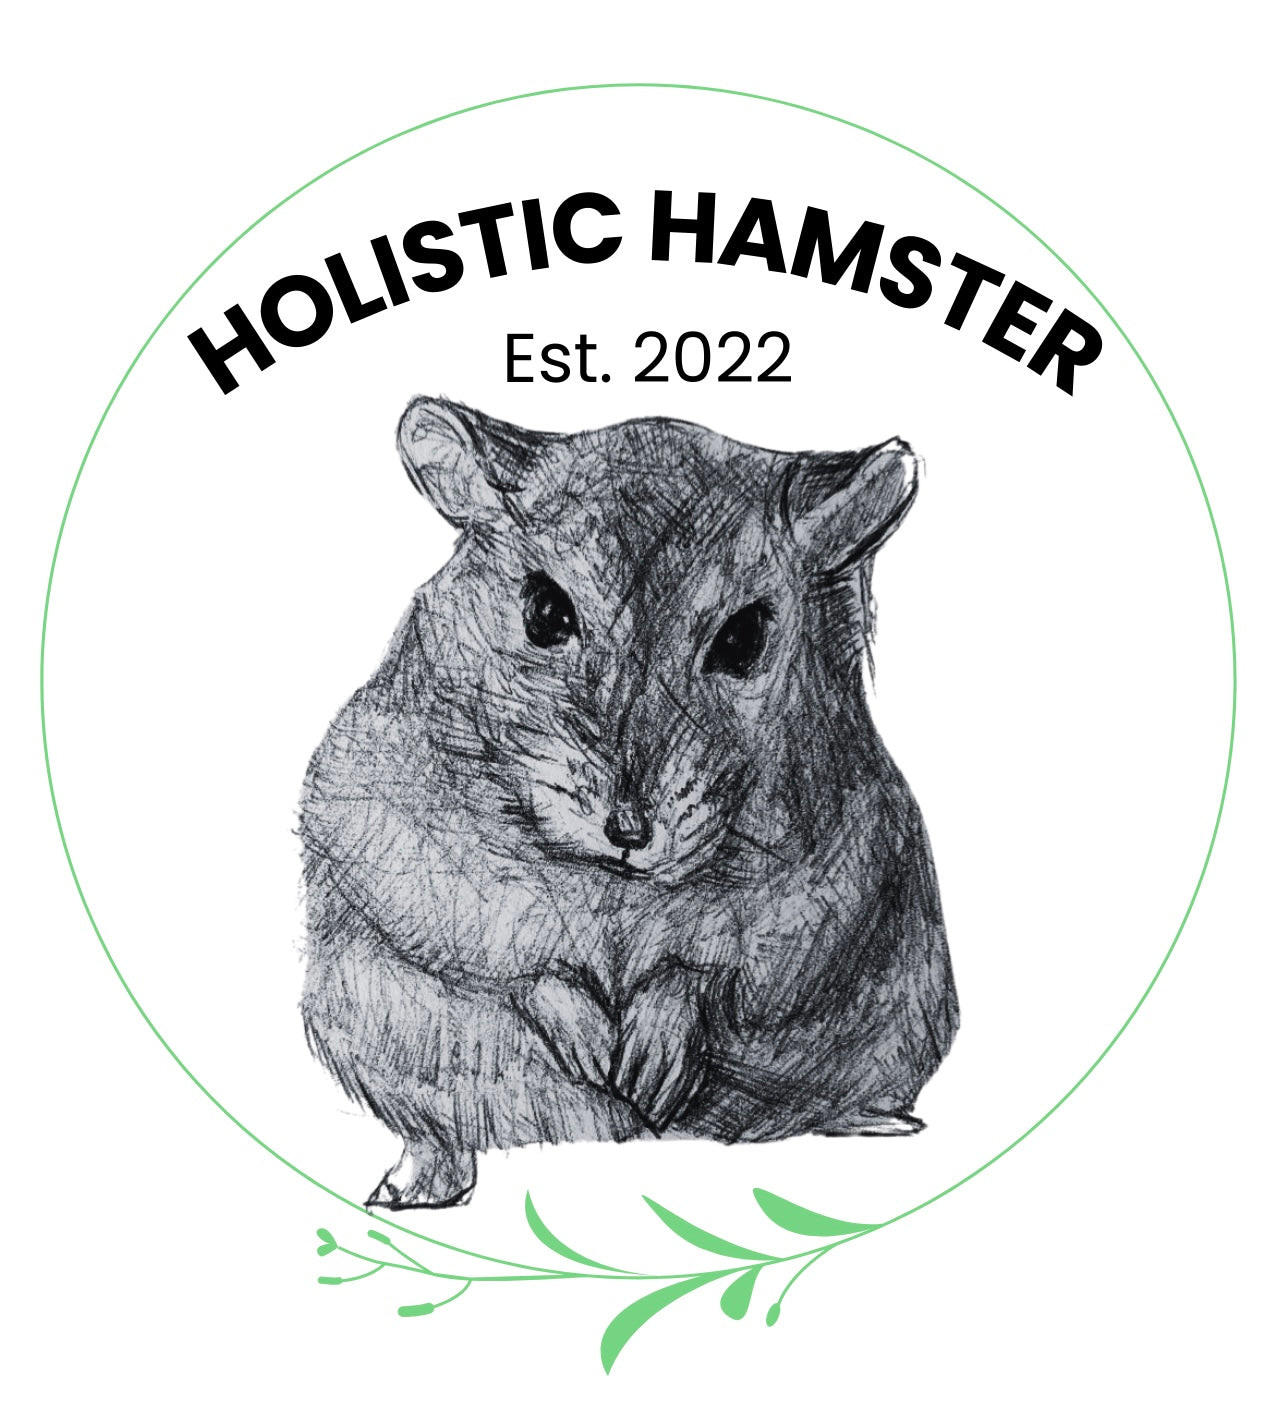 Holistic Hamster